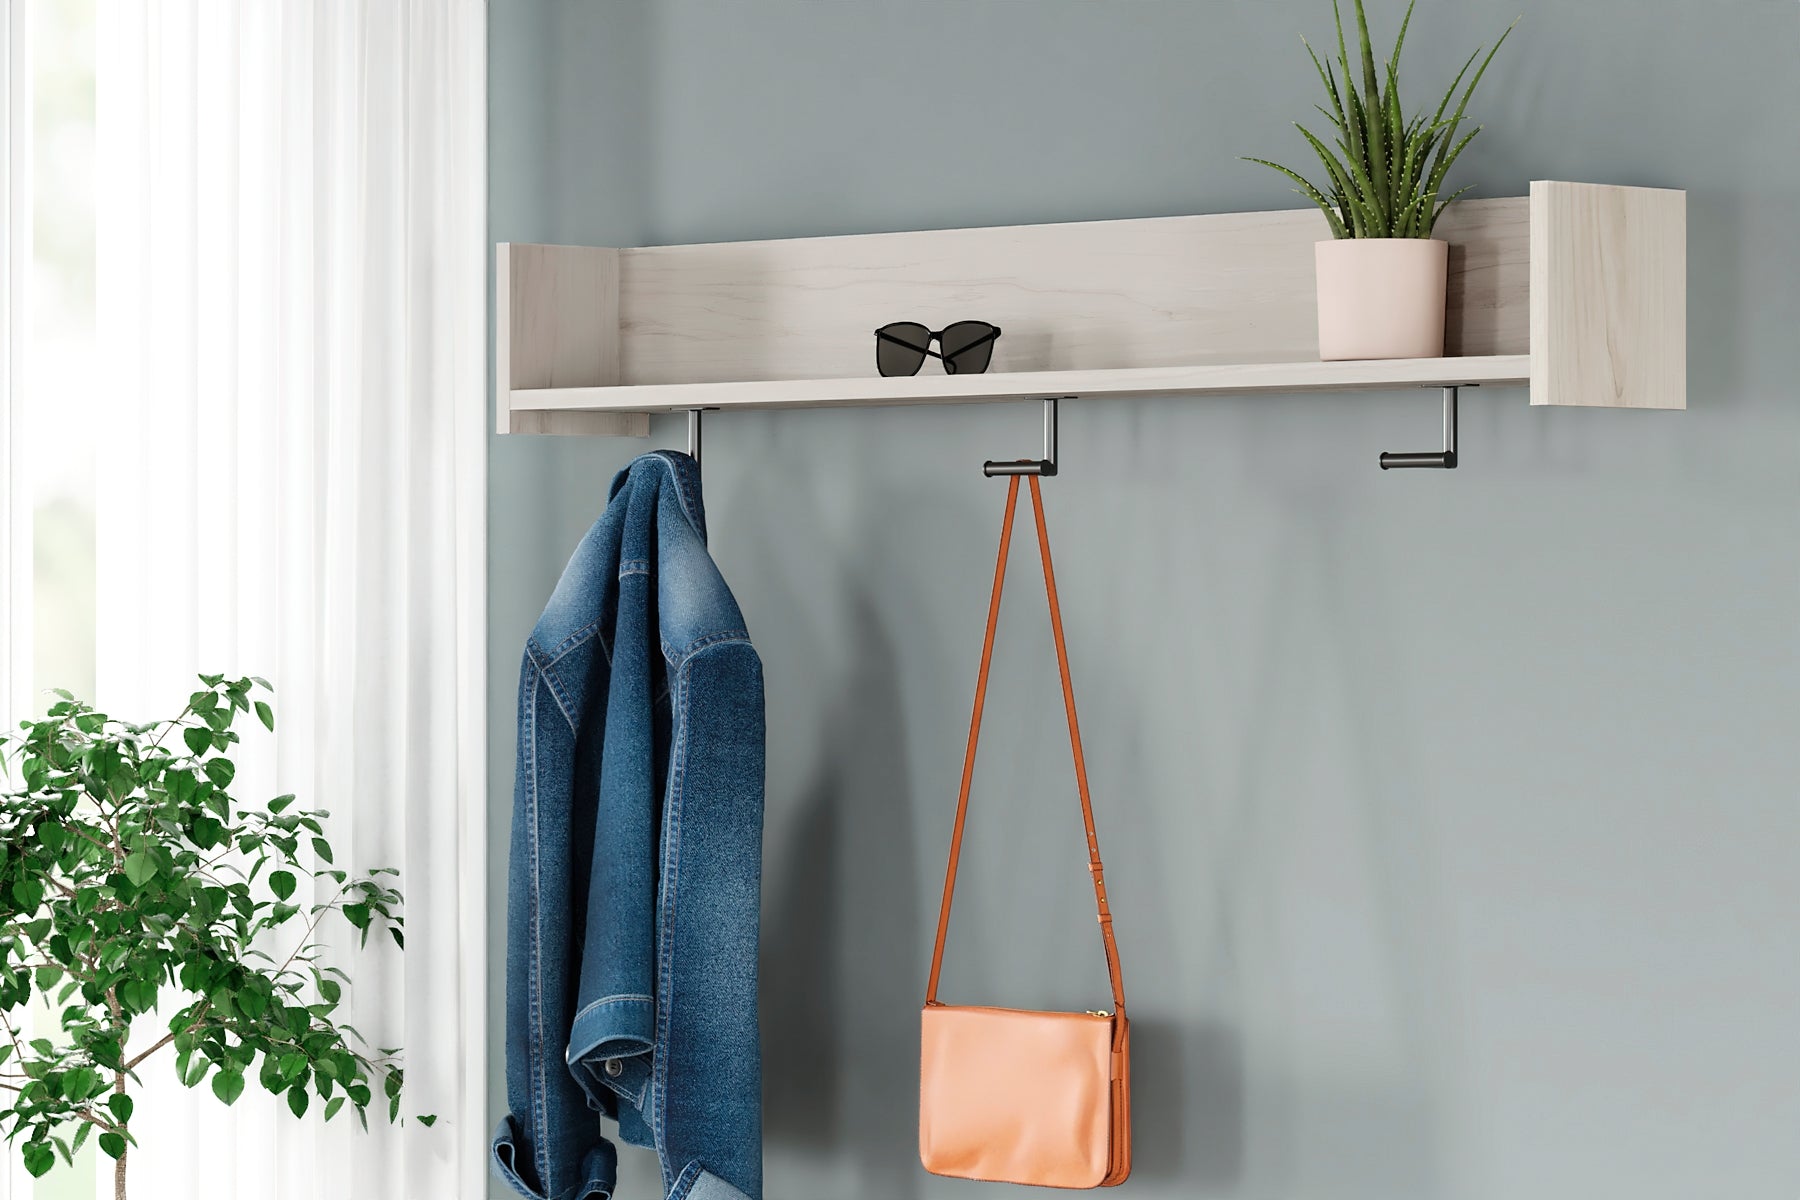 wall coat hanger with shelf